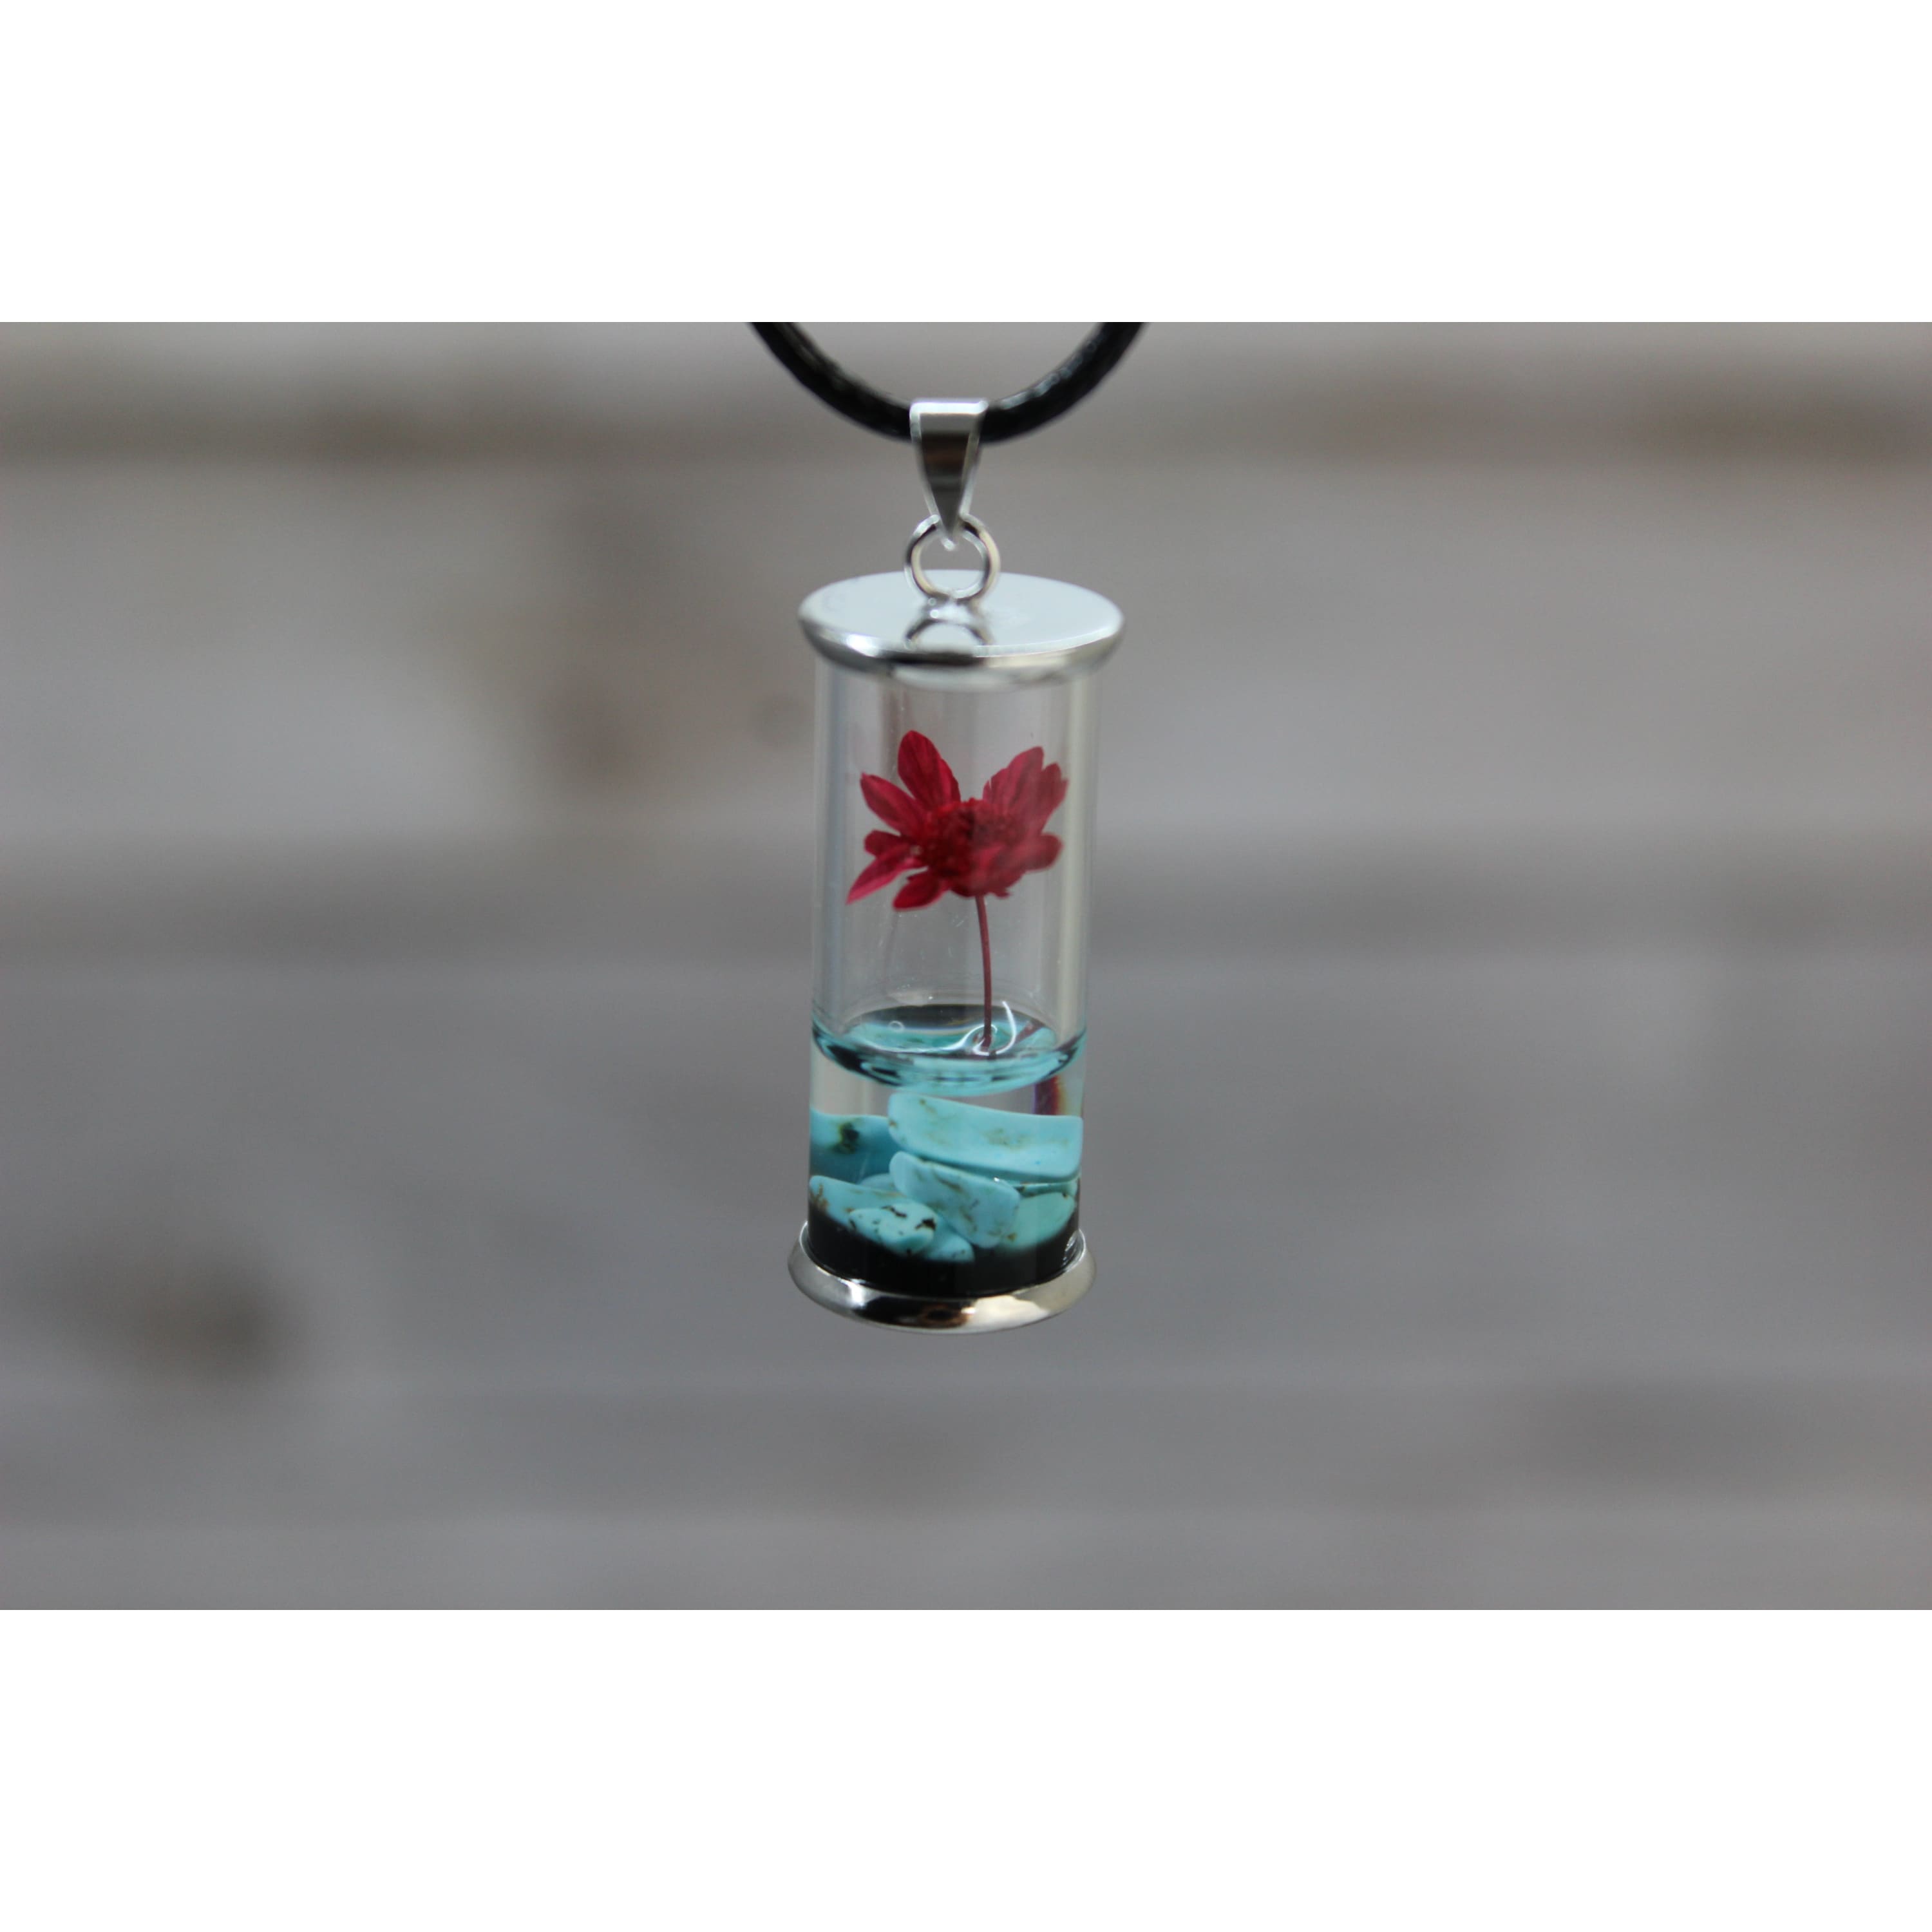 https://cdn.shopify.com/s/files/1/0629/7246/1311/products/liquid-fluid-plant-water-jewellery-art-wish-necklace-in-glass-jewelry-bottle-flower-770.jpg